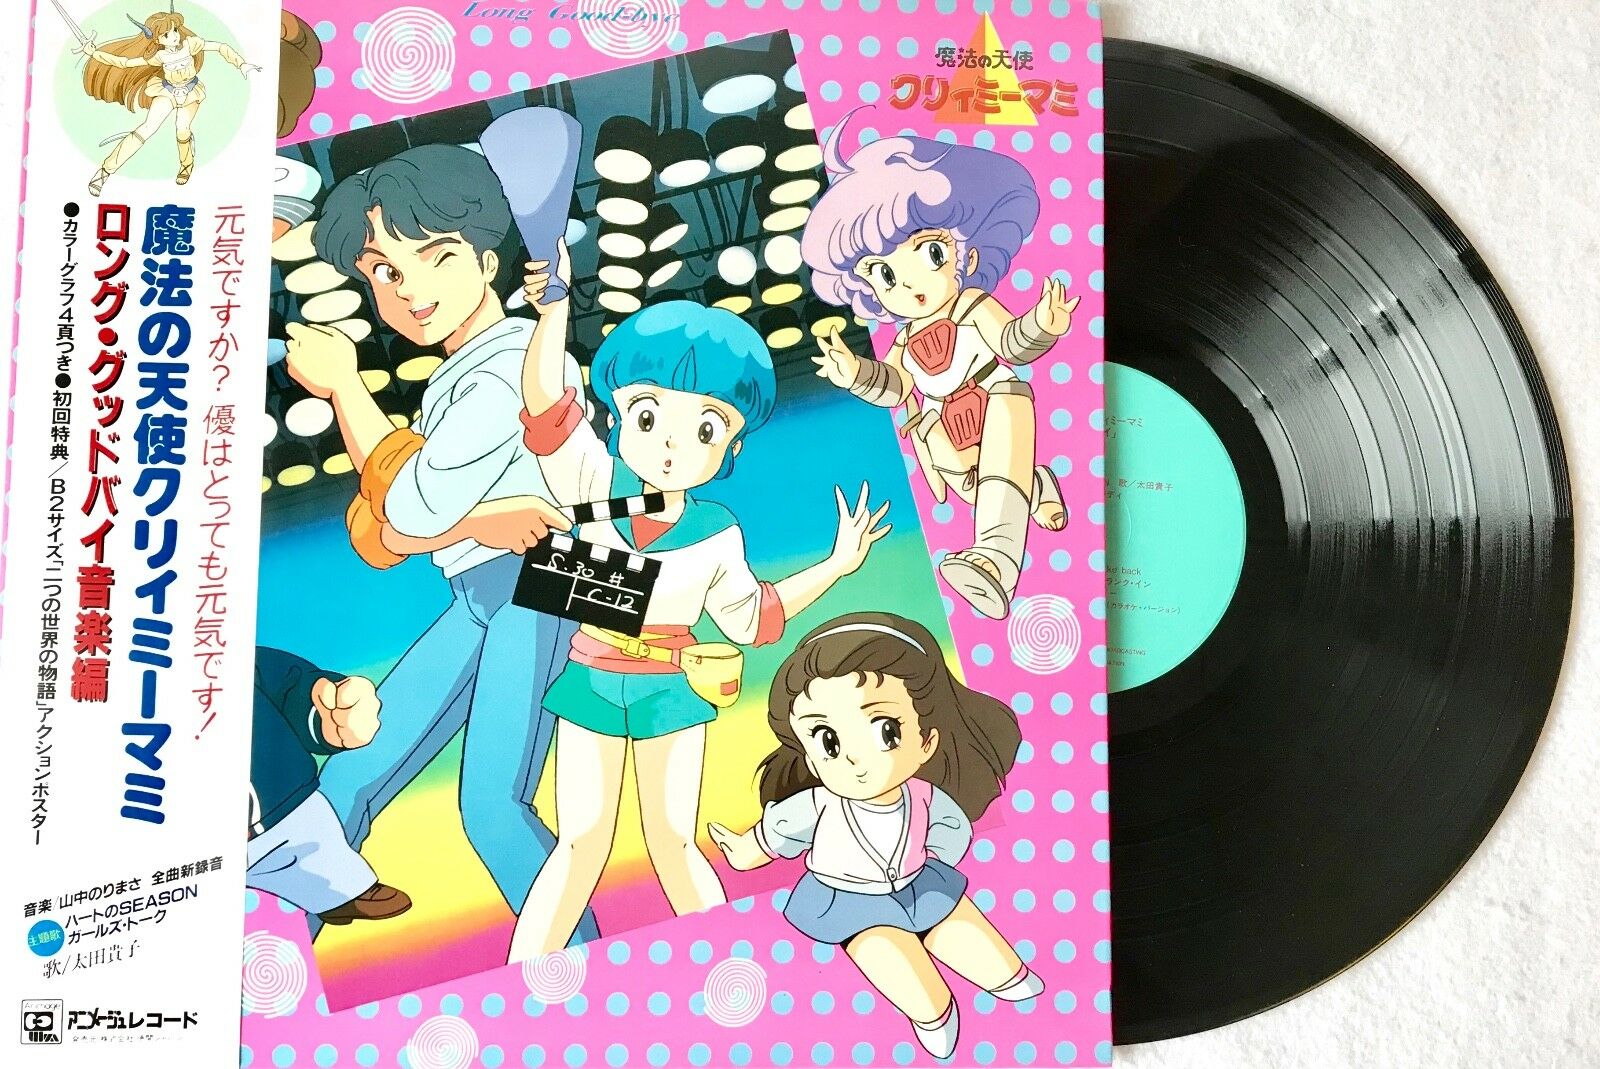 Anime Planetarian Original SoundTrack - Album by VisualArt's / Key Sounds  Label - Apple Music